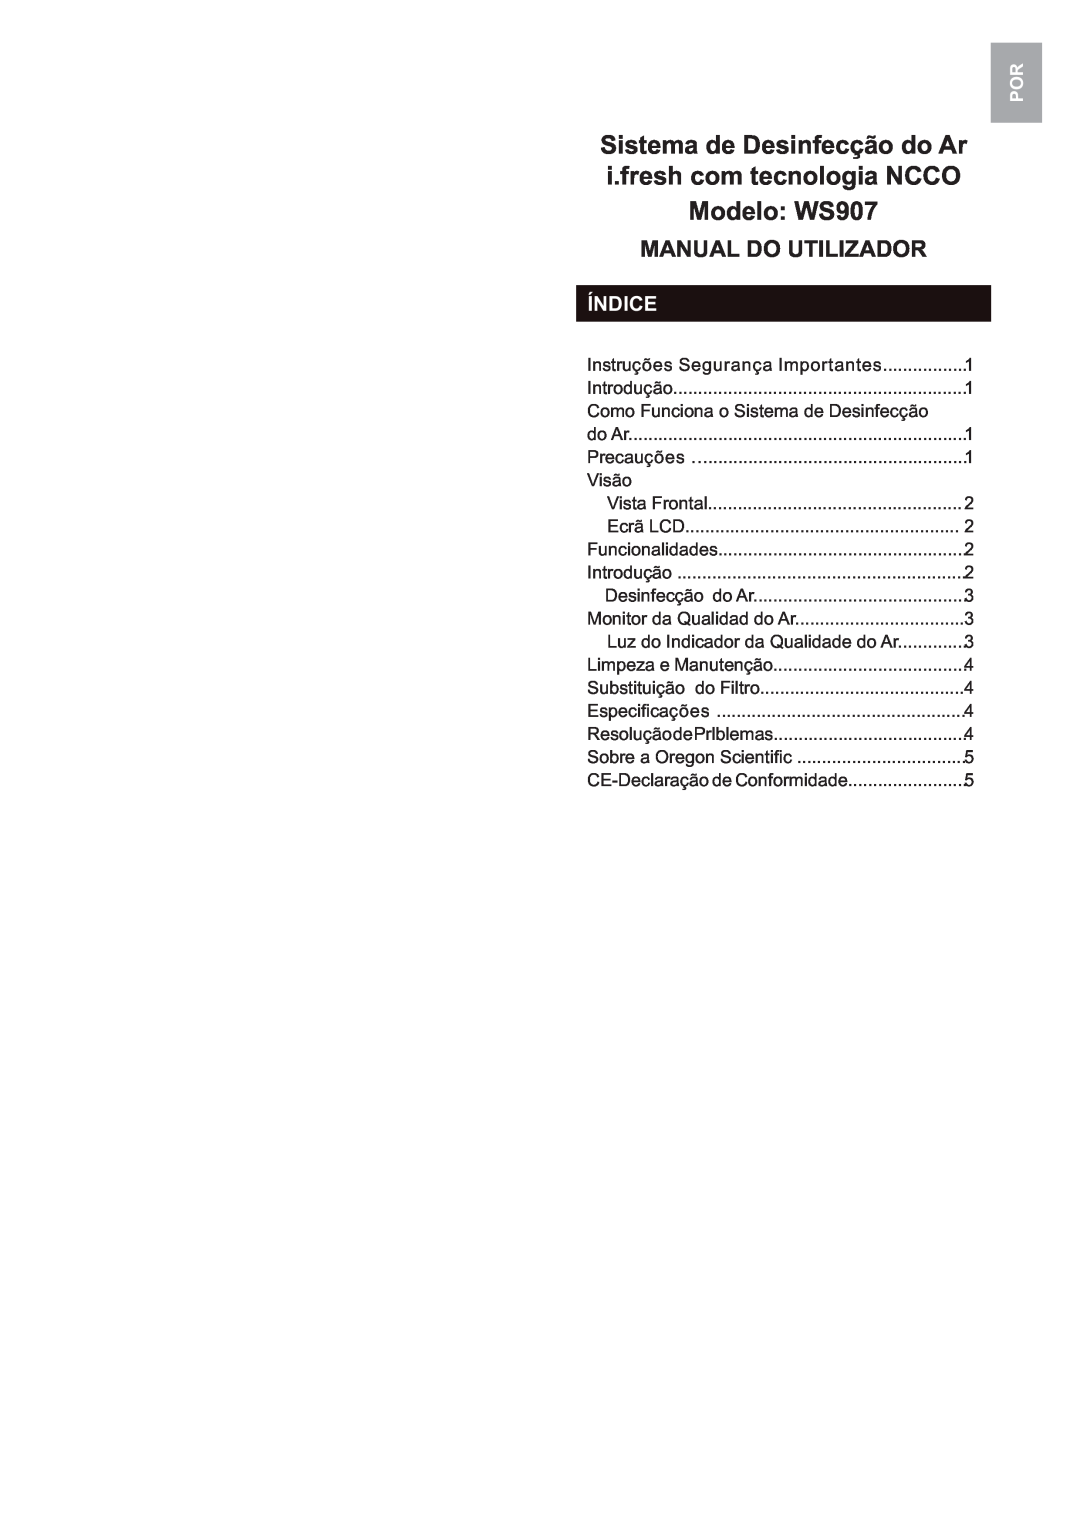 Oregon Scientific user manual Manual Do Utilizador, Índice, Modelo WS907 